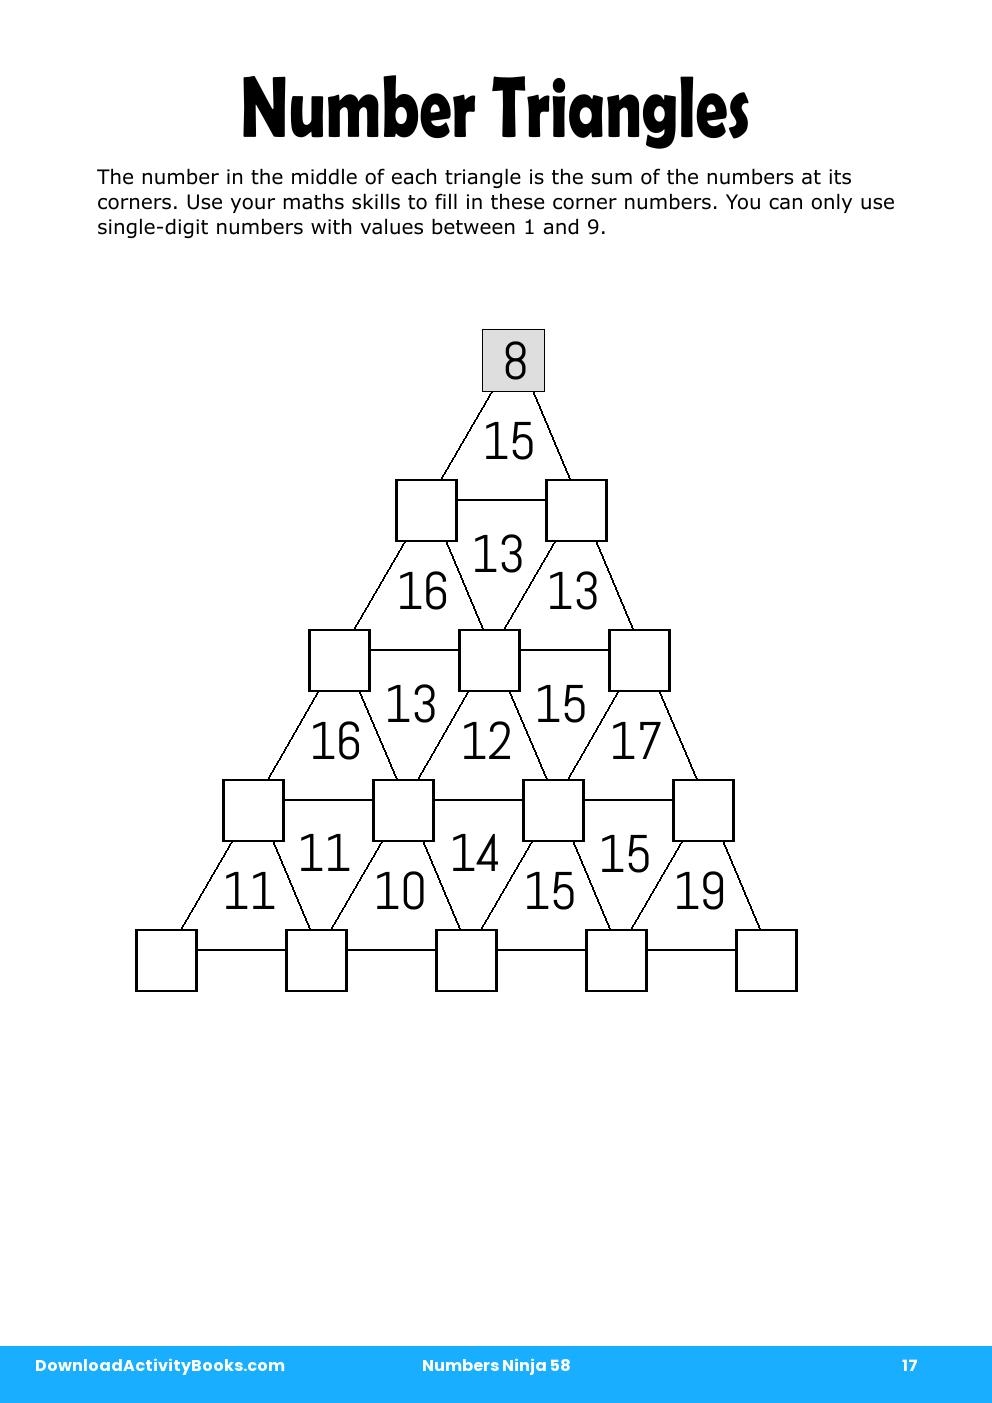 Number Triangles in Numbers Ninja 58